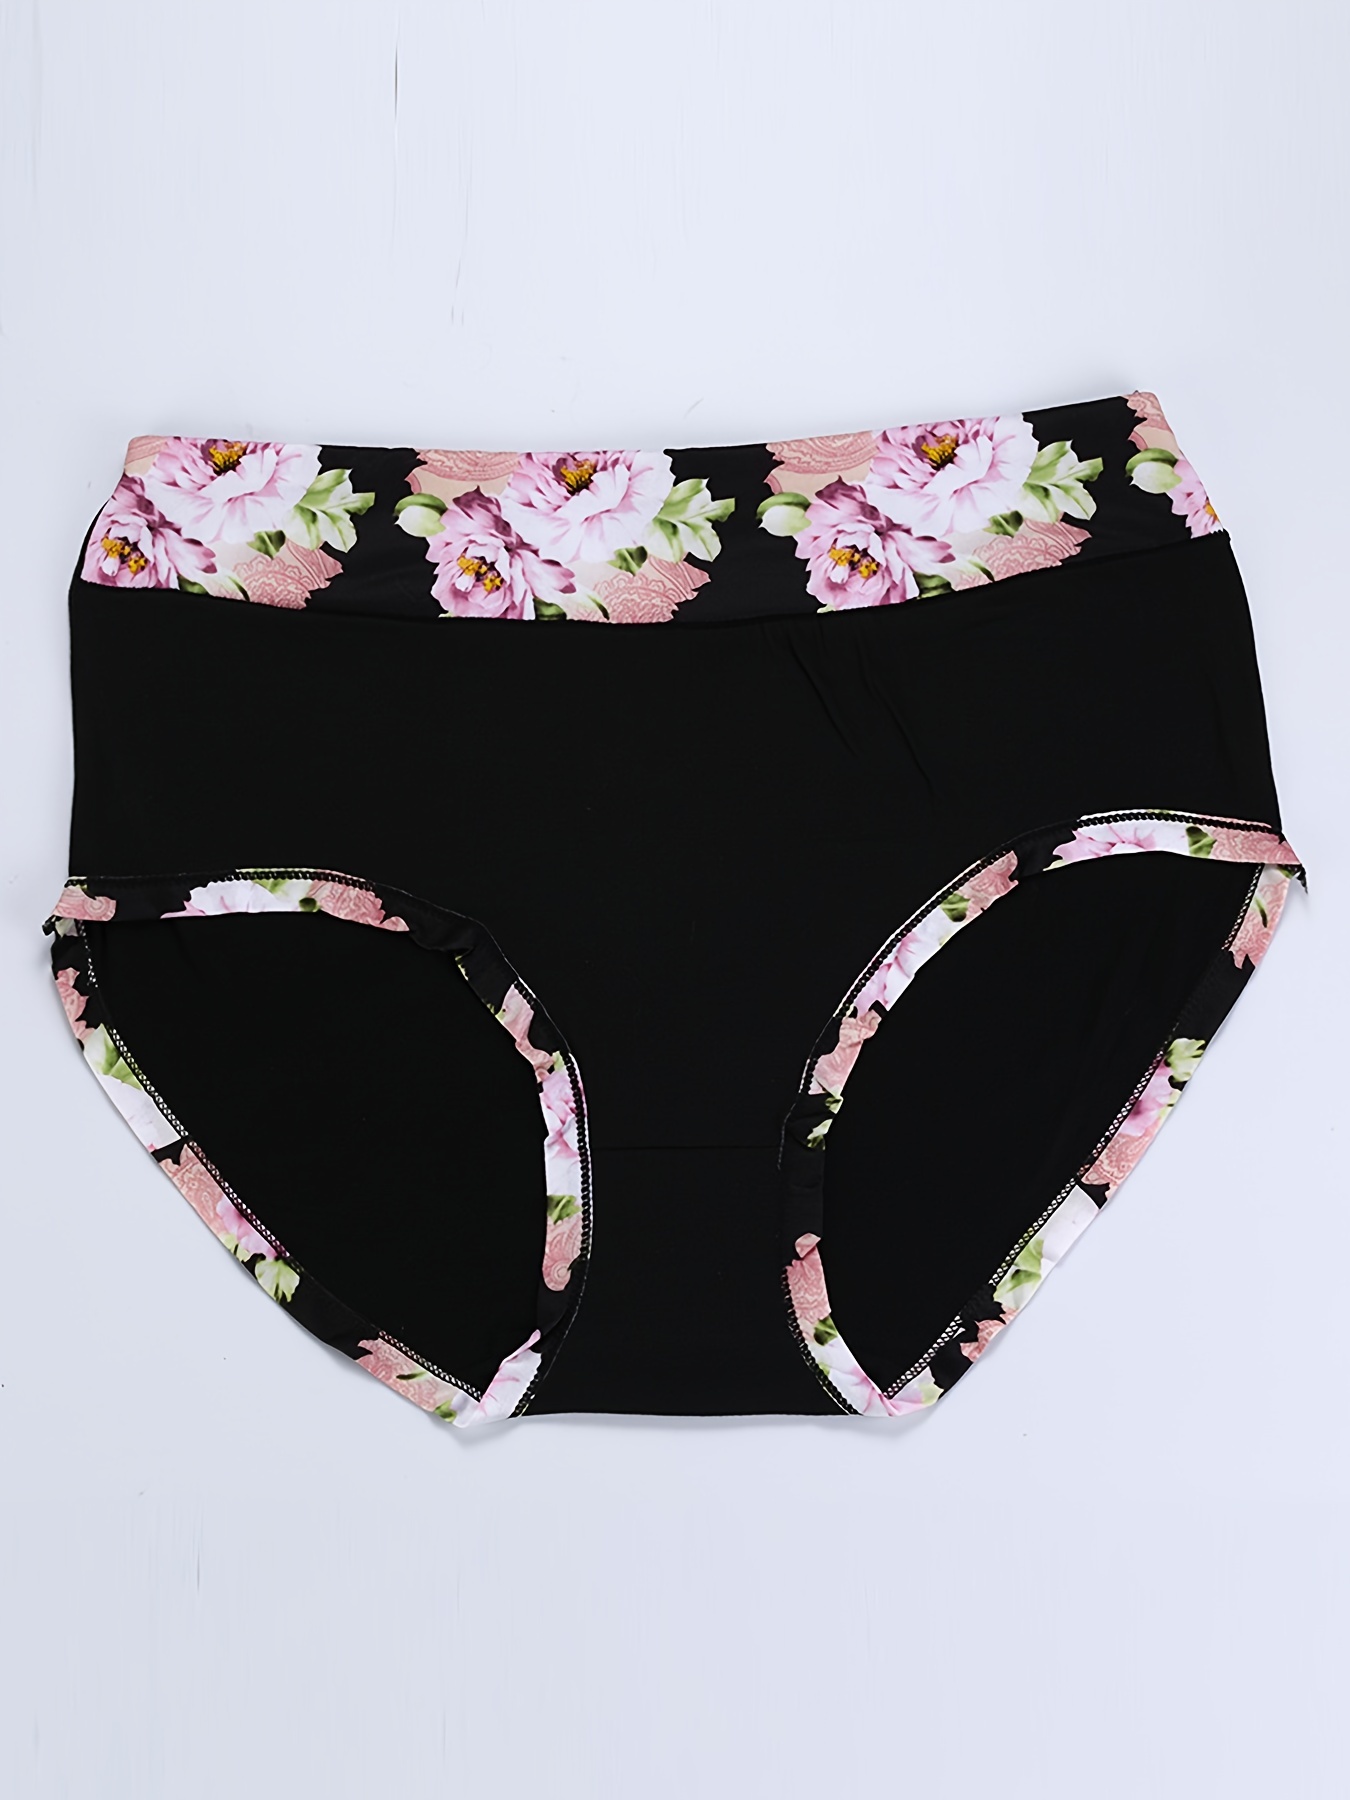 Thong Underwear Women Floral Print Breathable Cotton Women's